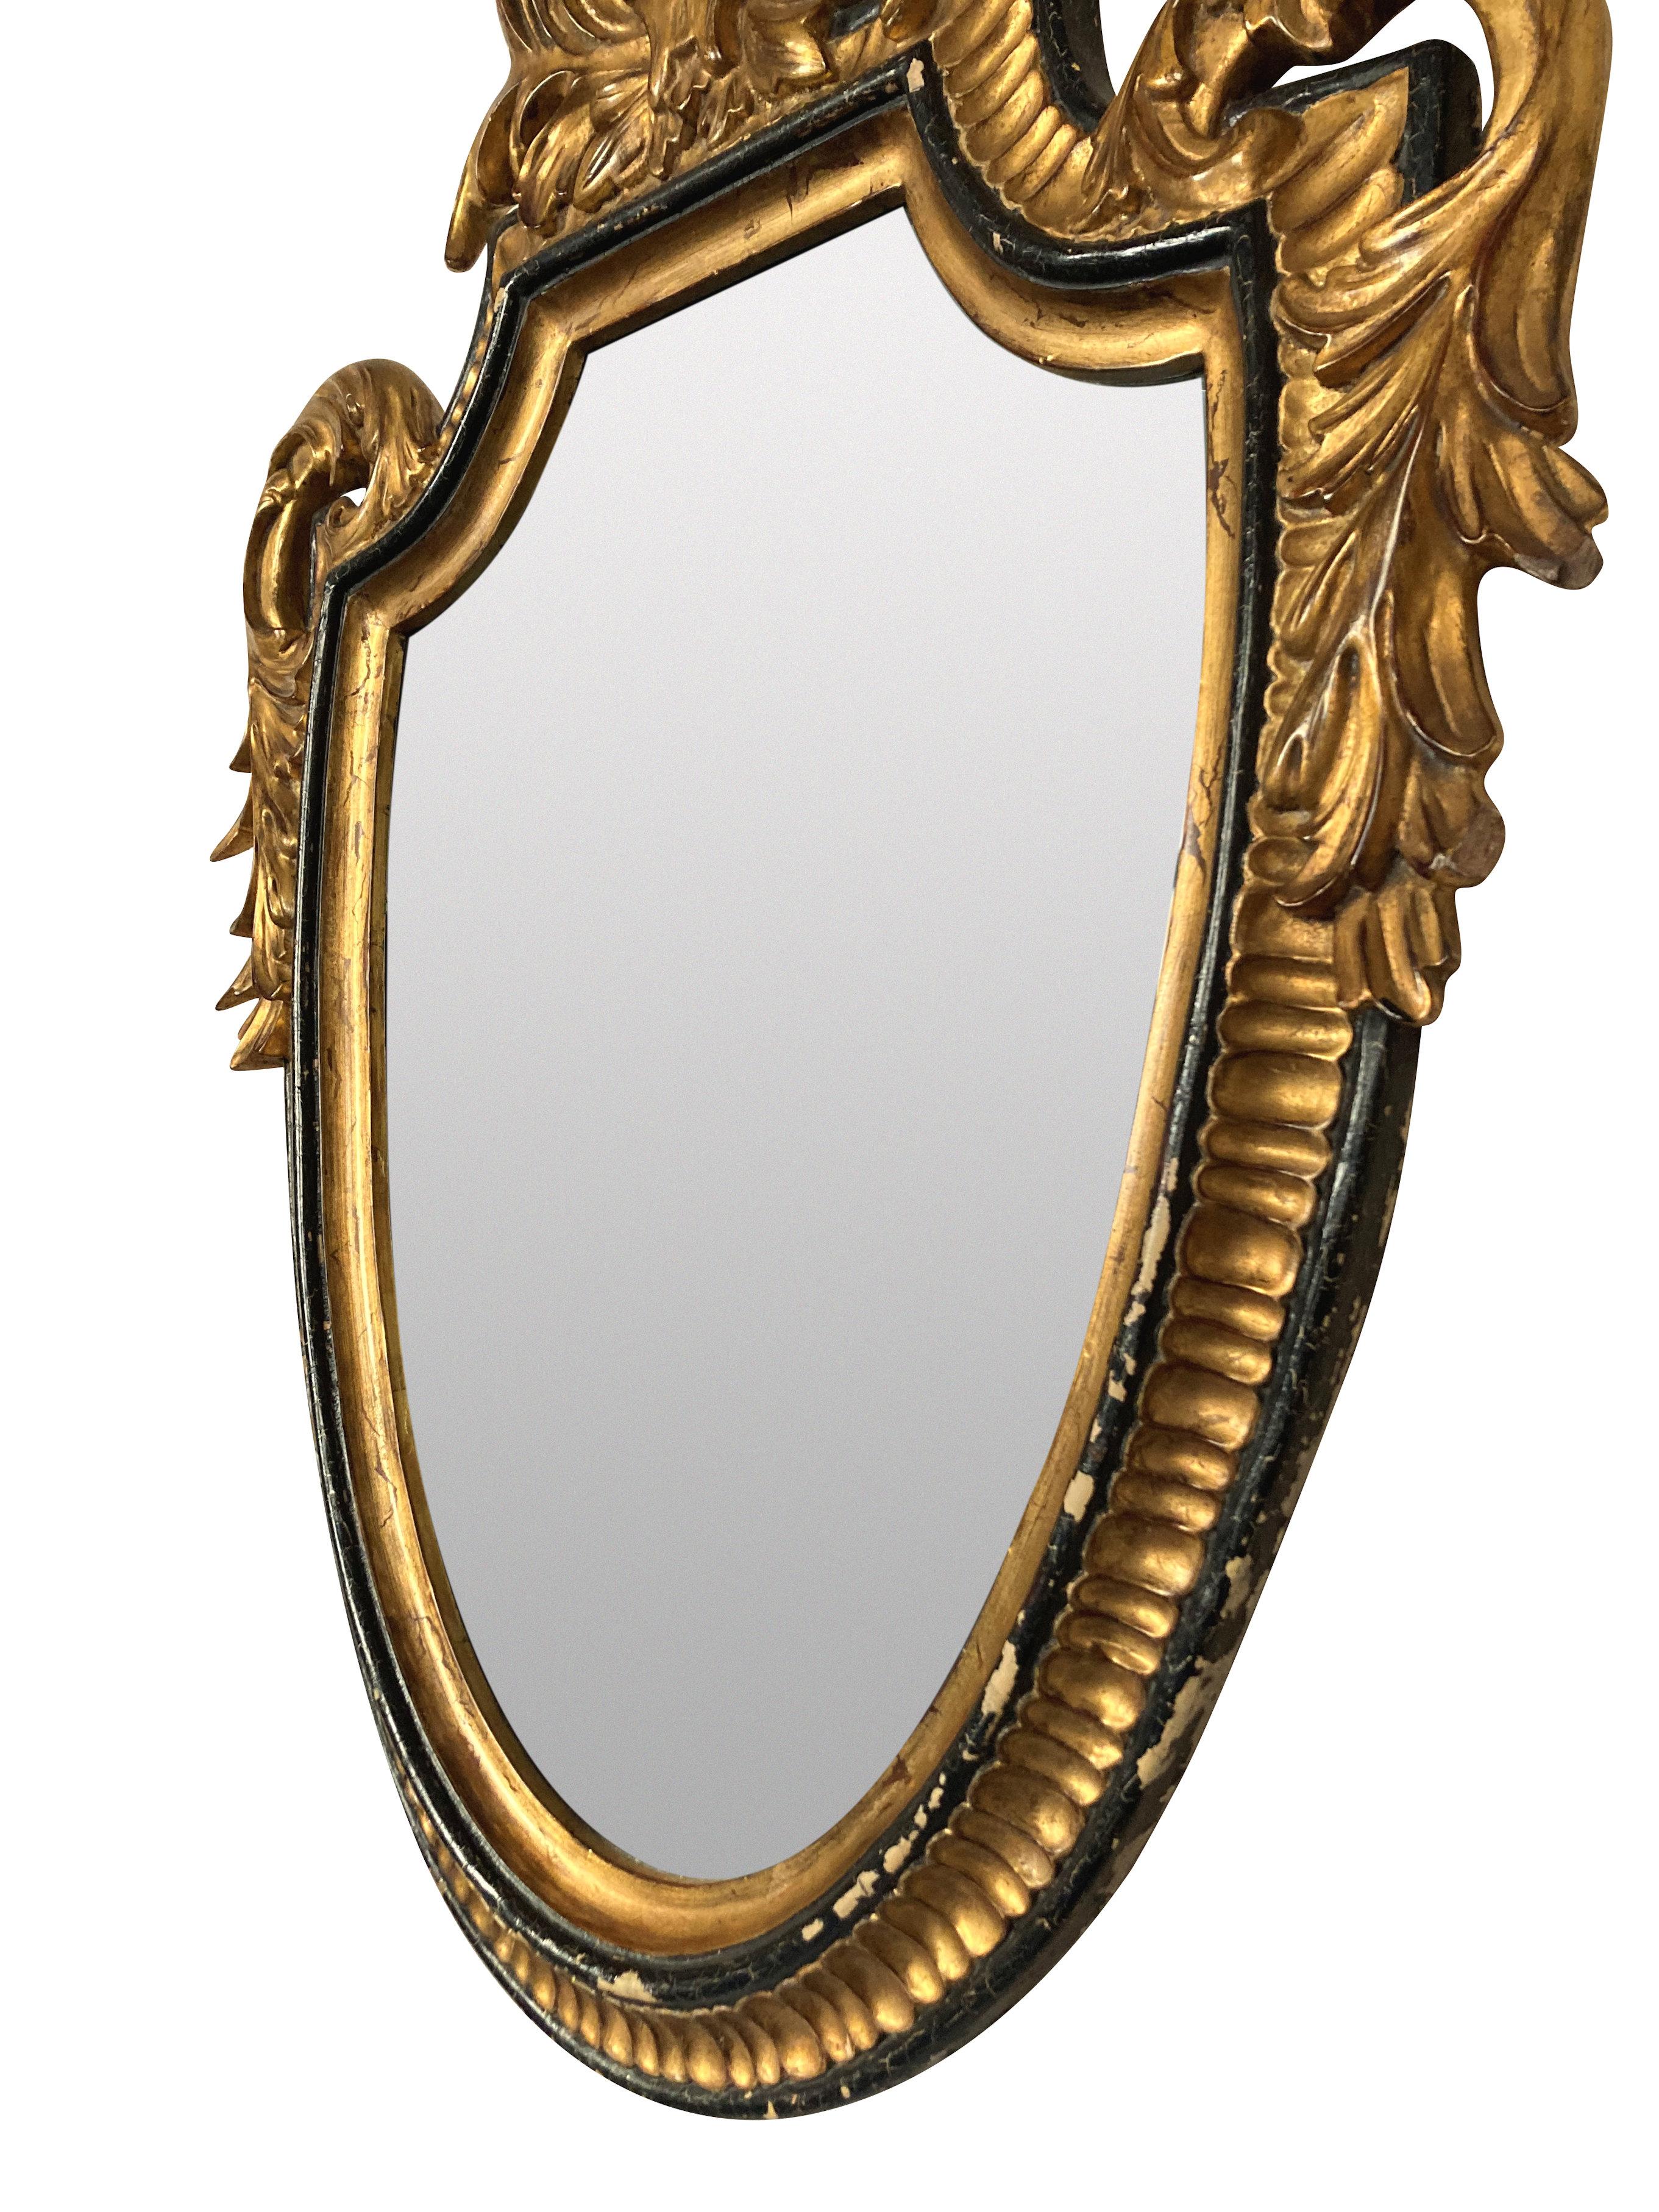 dauphine mirror